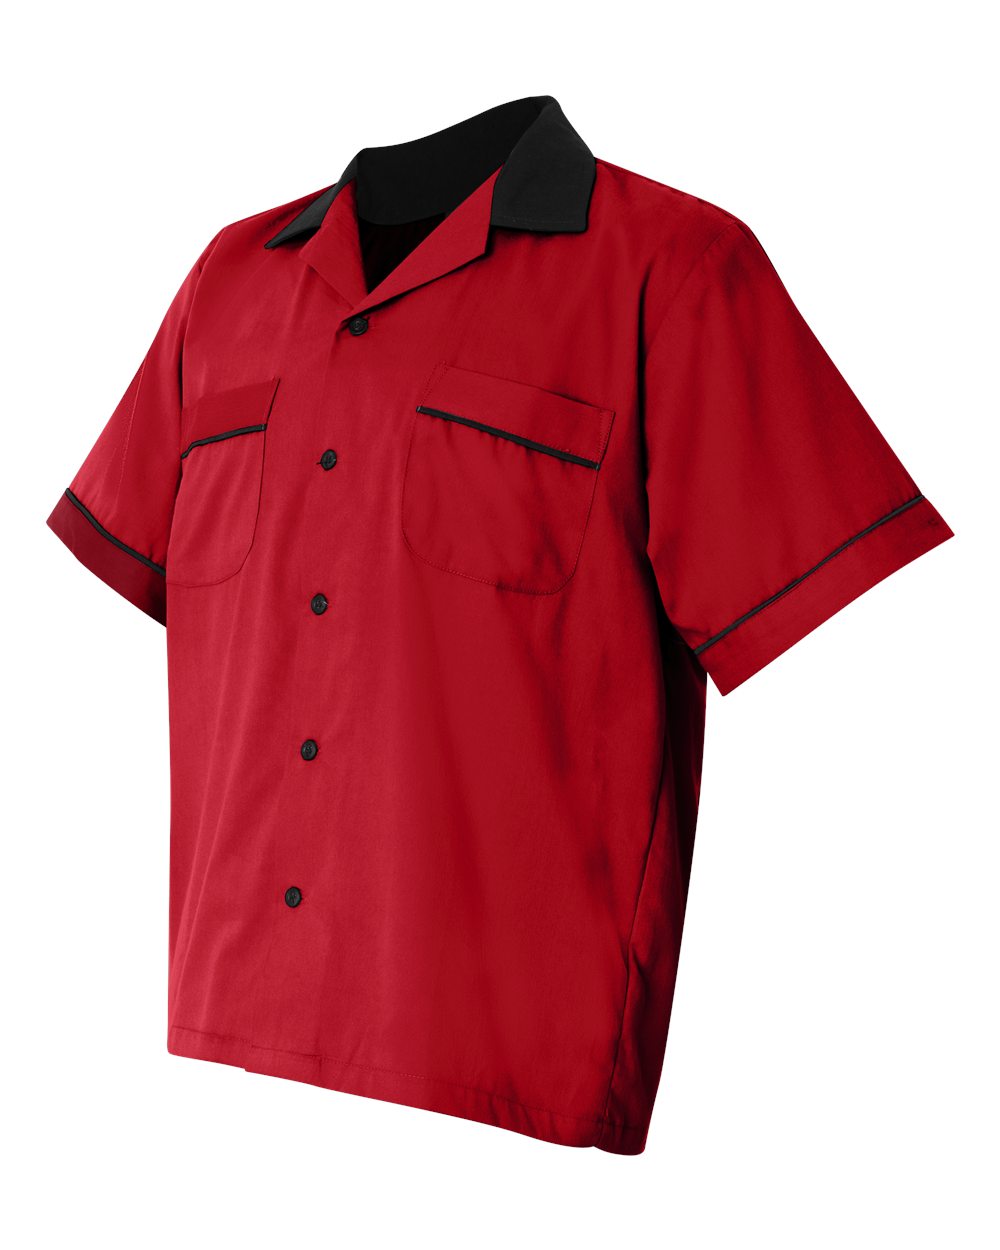 Hilton HP2244 Bowling Shirt Red with Black Trim Custom Text or Design